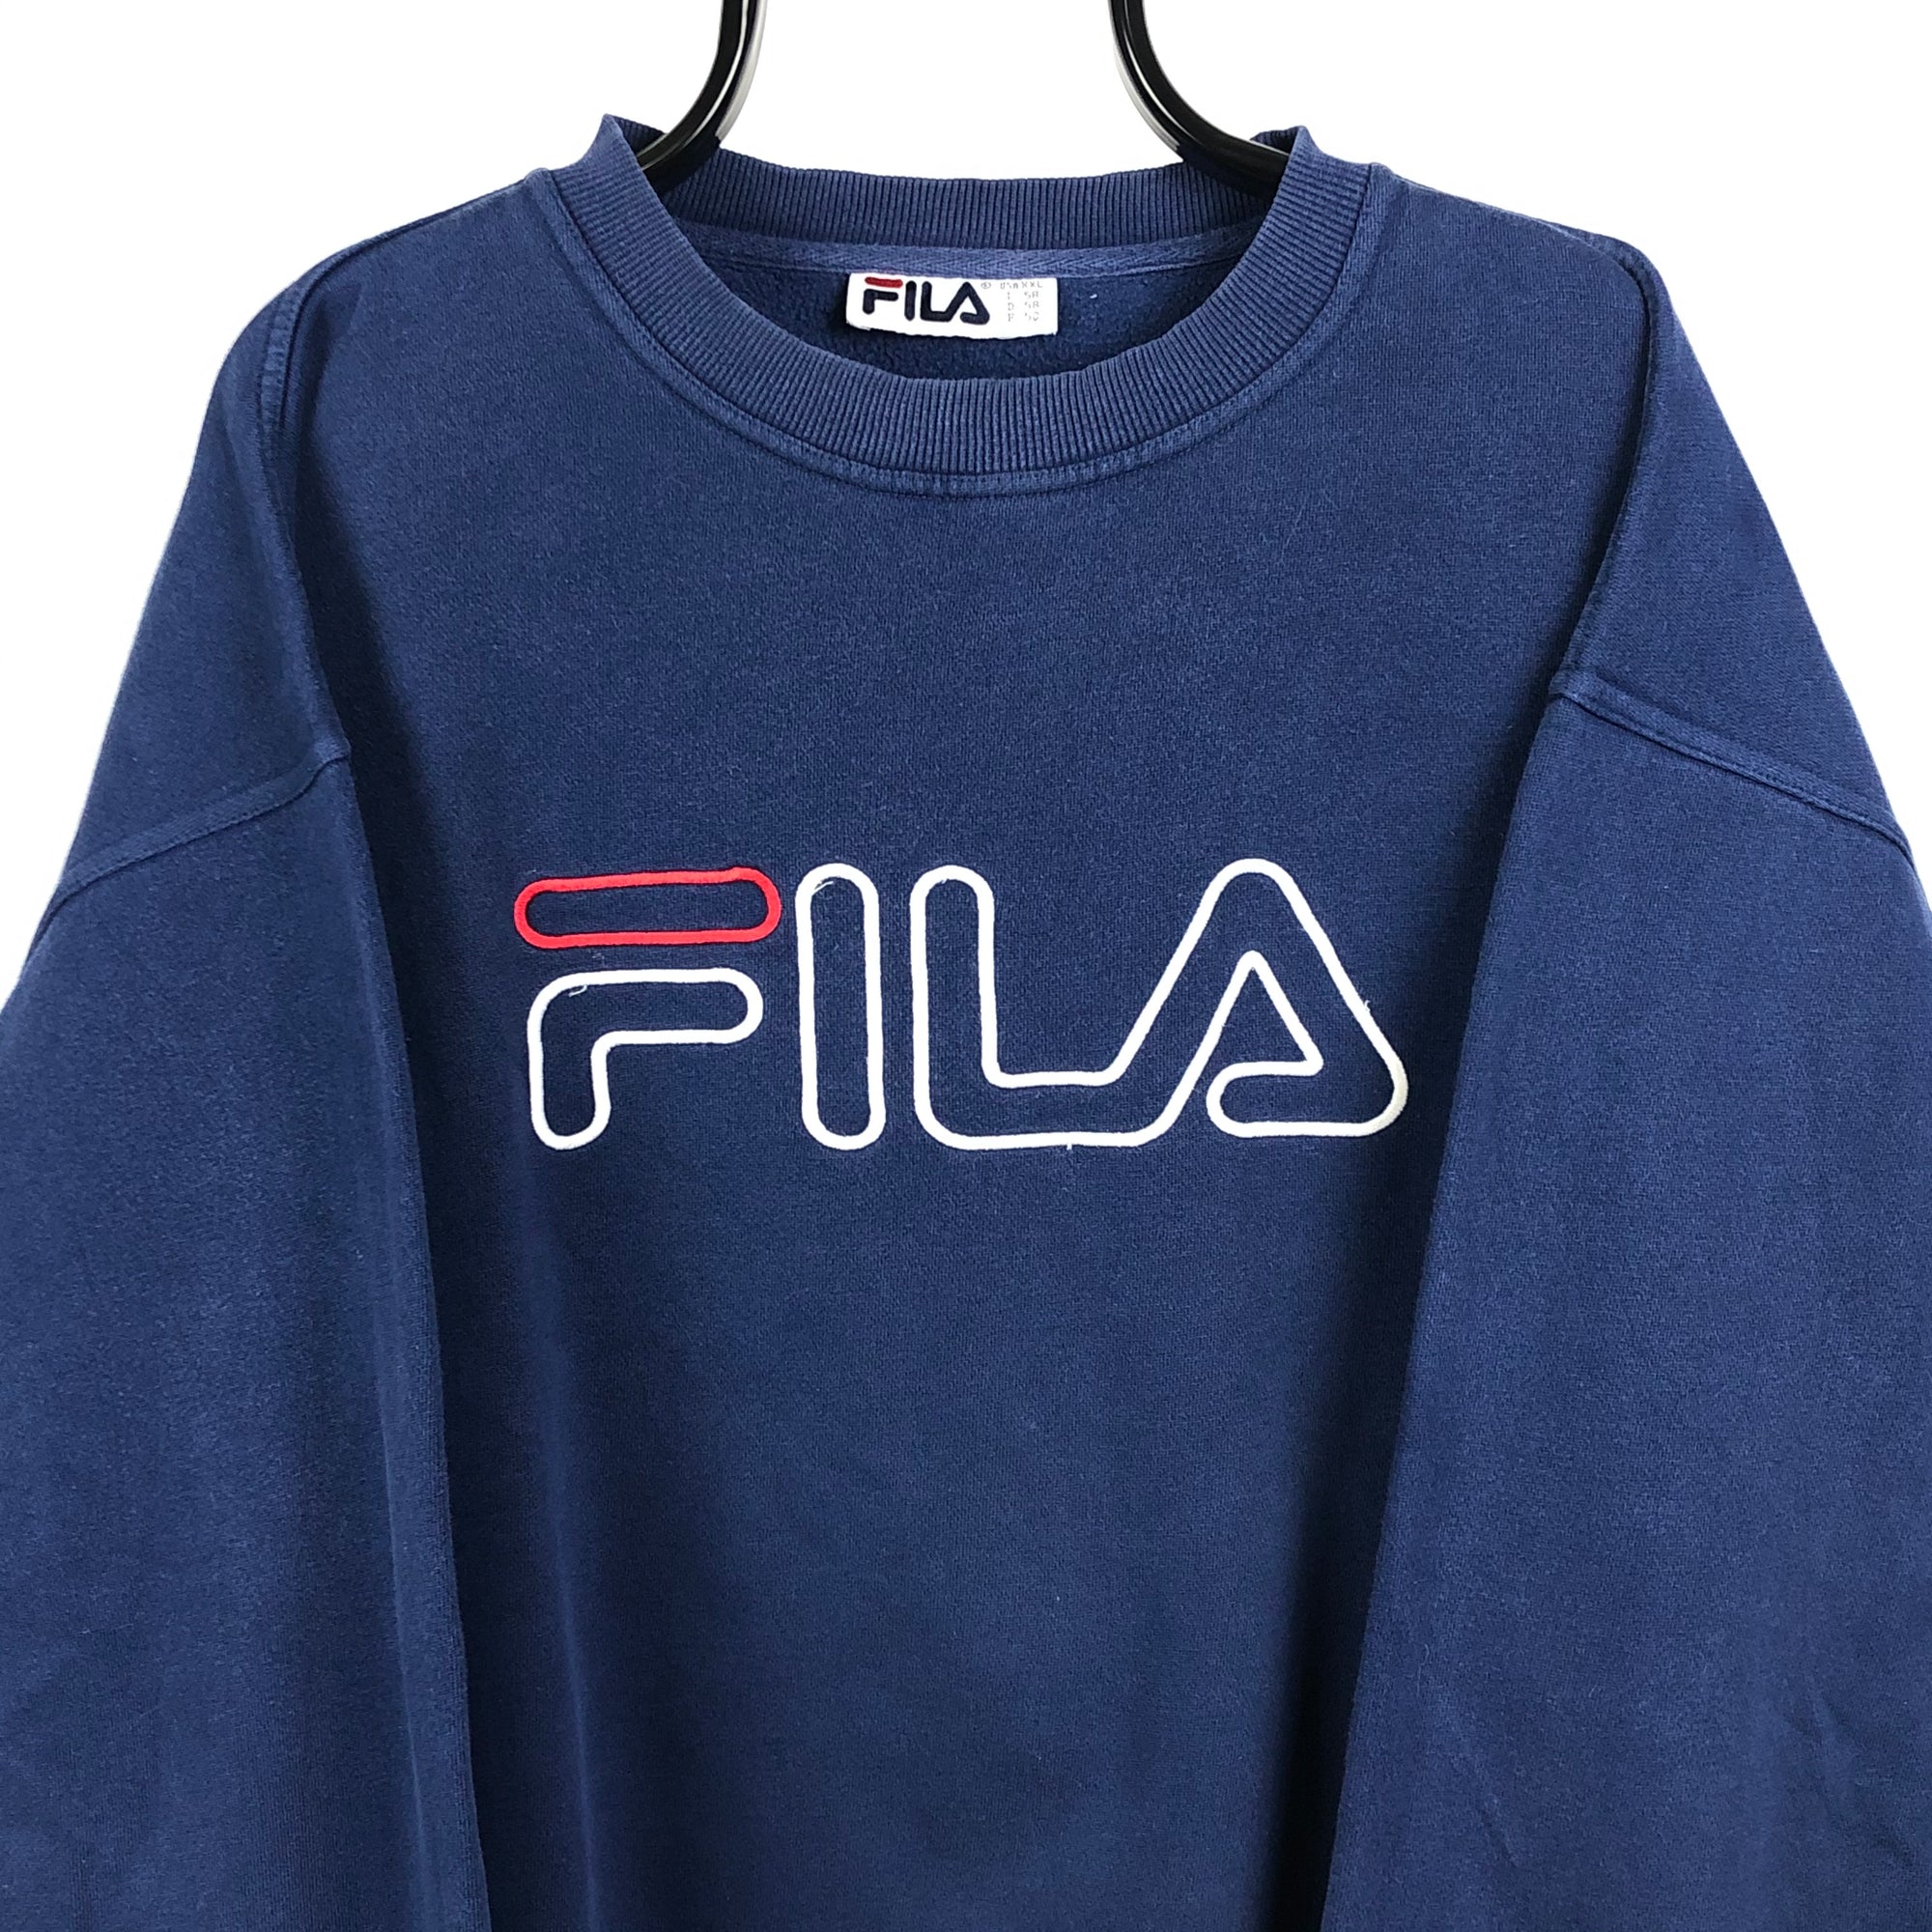 Vintage Fila Spellout Sweatshirt in Navy - Men's XL/Women's XXL